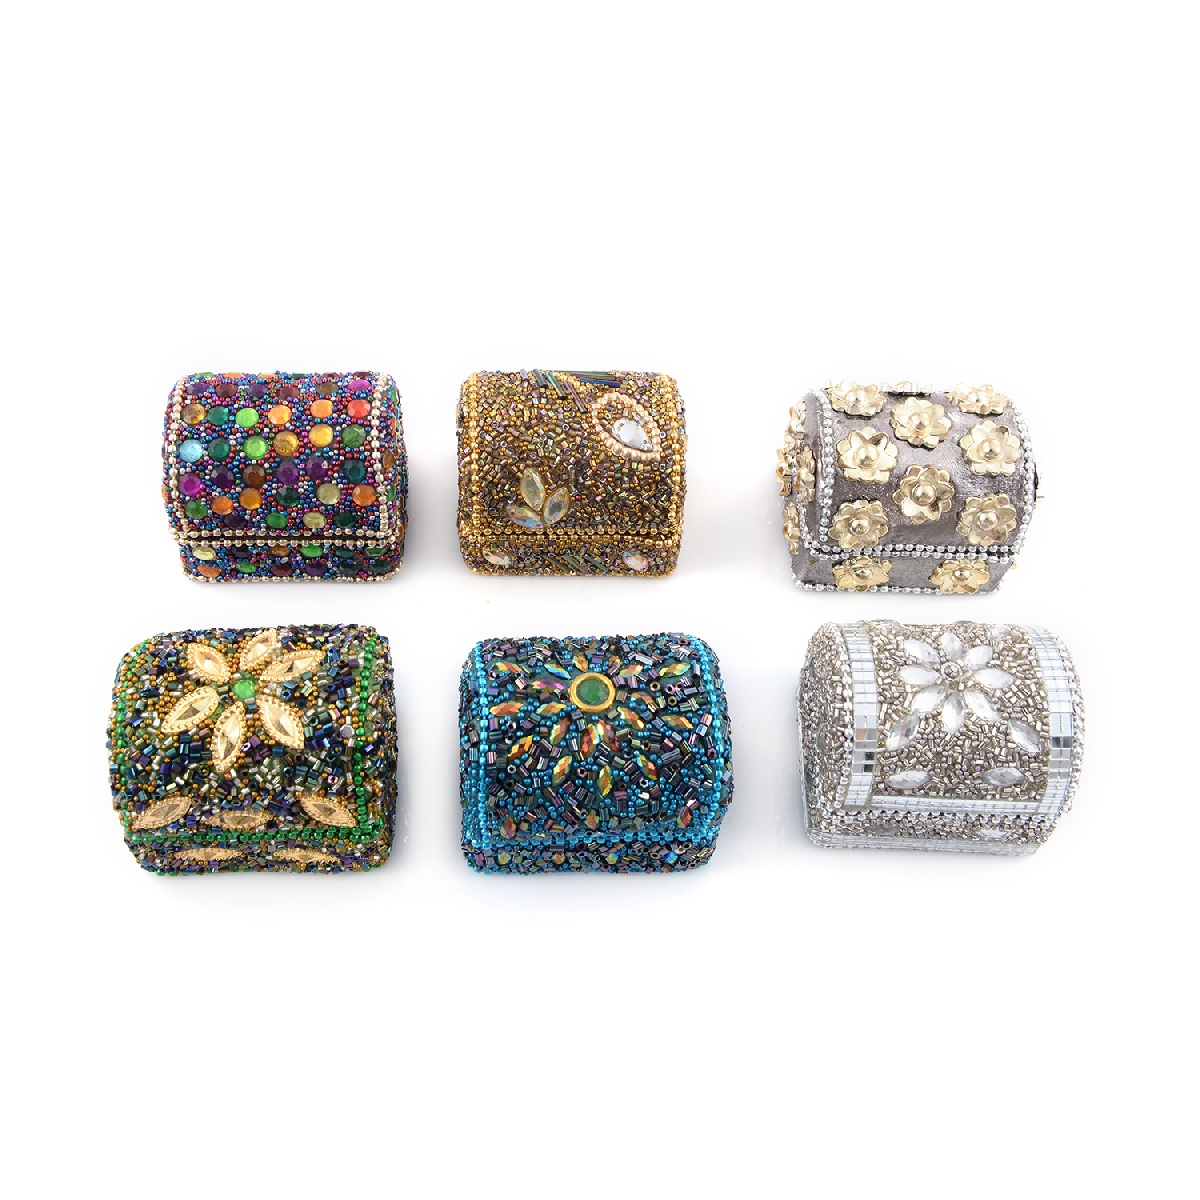 Shop LC Set of Handcrafted Mini Multi Color Bead Treasure Chest Organizer  Box Storage Gifts